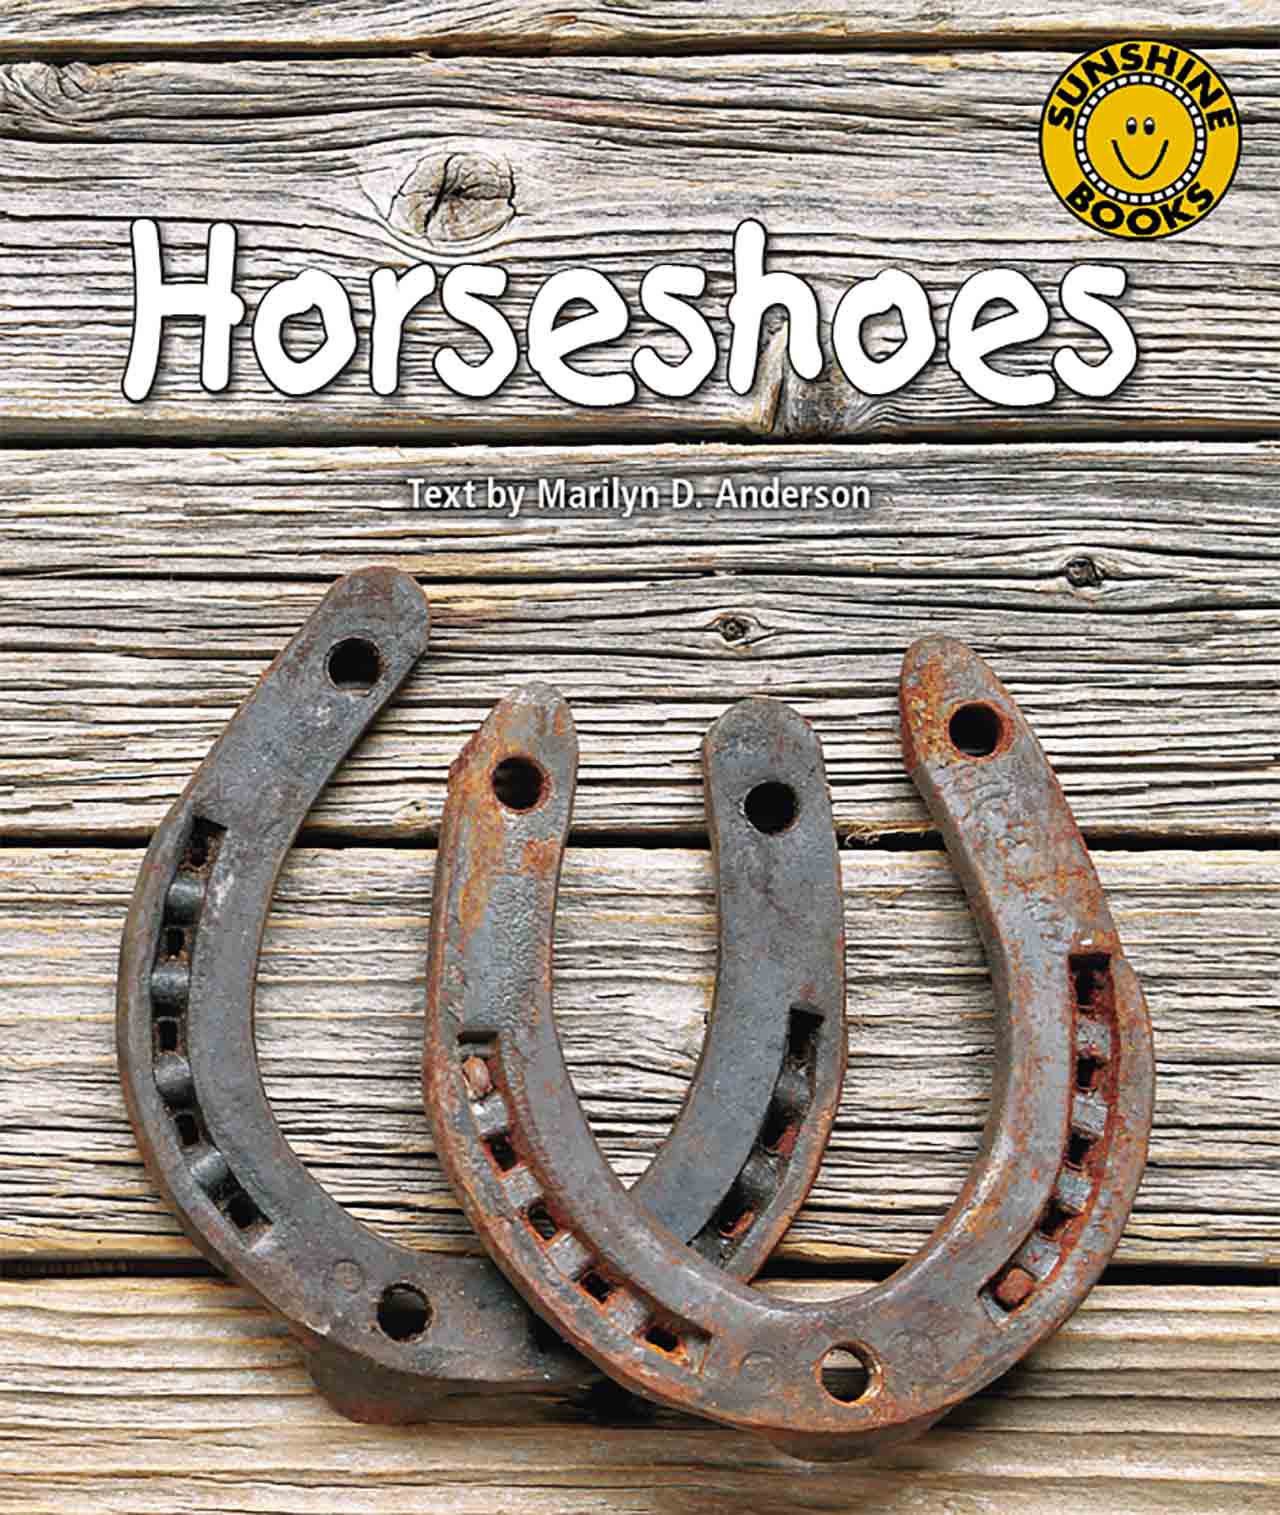 3) New Remuda Tire Company Nail On Horseshoes Size 5 Street Shoe Ships FREE  | eBay